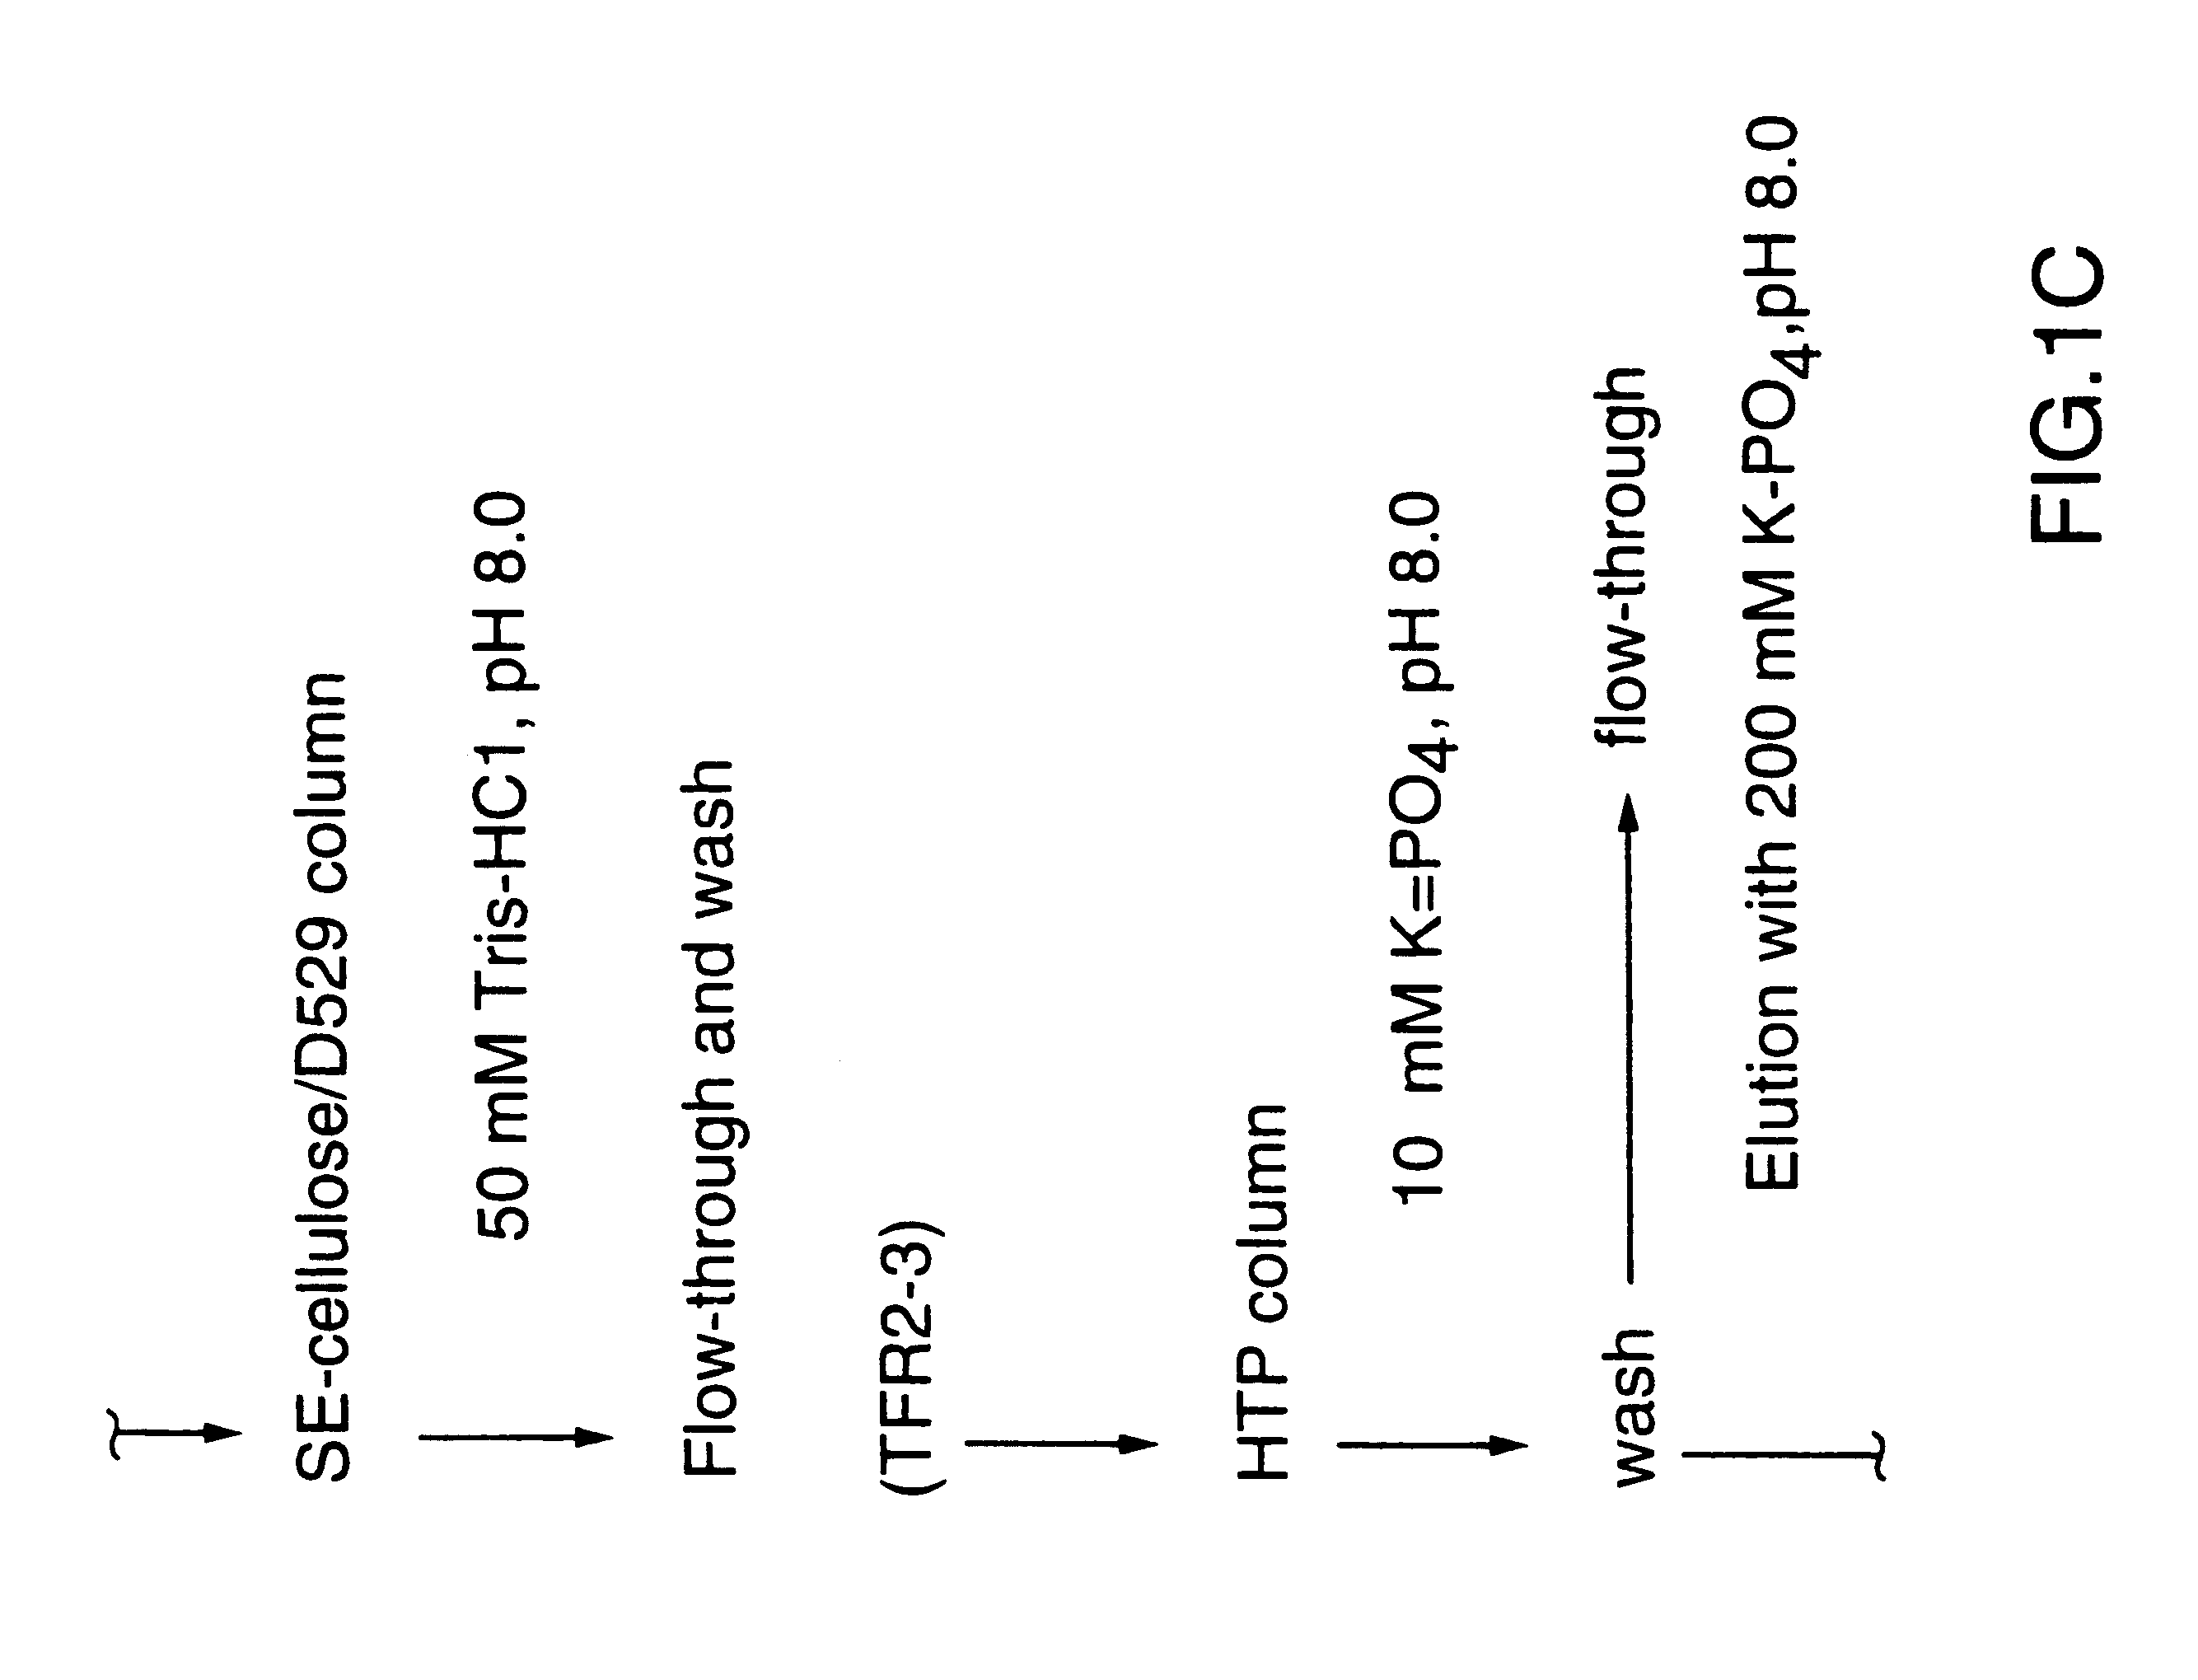 Transferrin receptor protein of Moraxella